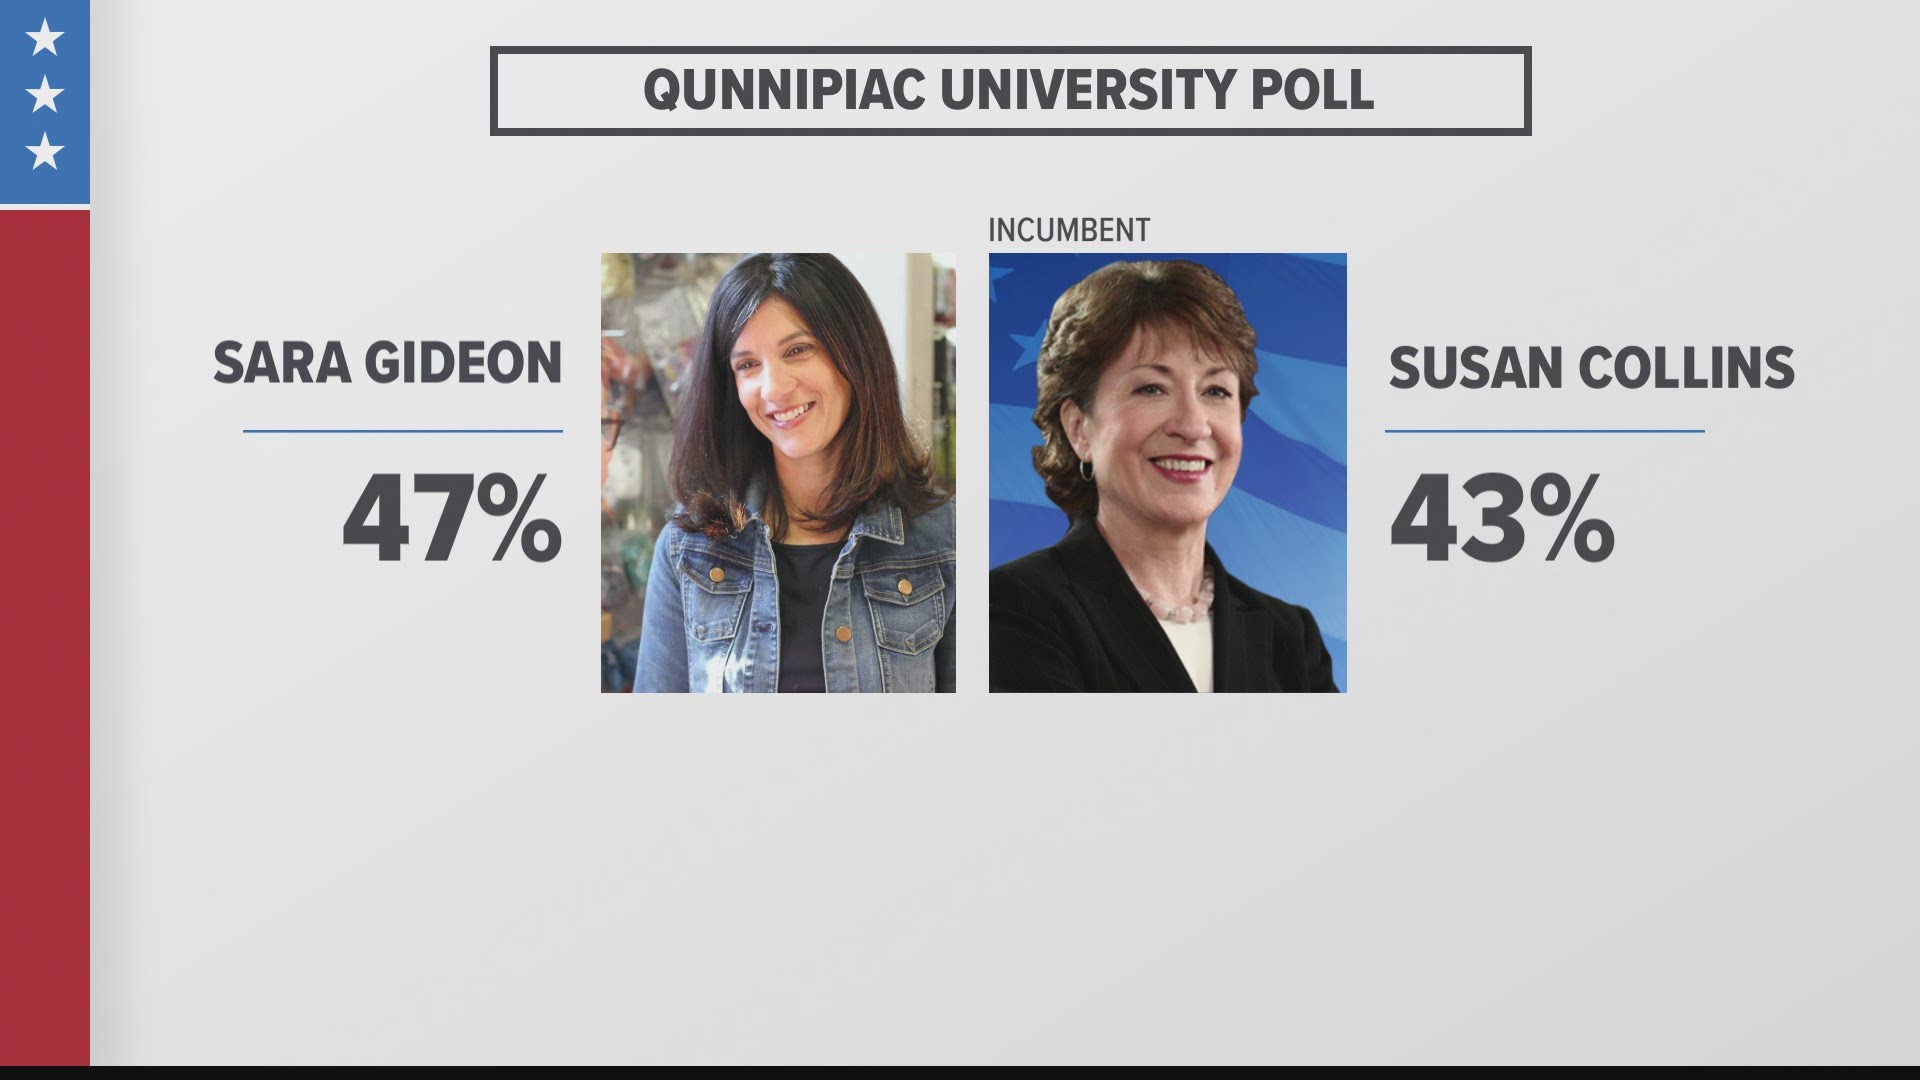 The Quinnipiac University poll shows Democrat Sara Gideon receiving 47% of the vote and Senator Susan Collins with 43%.